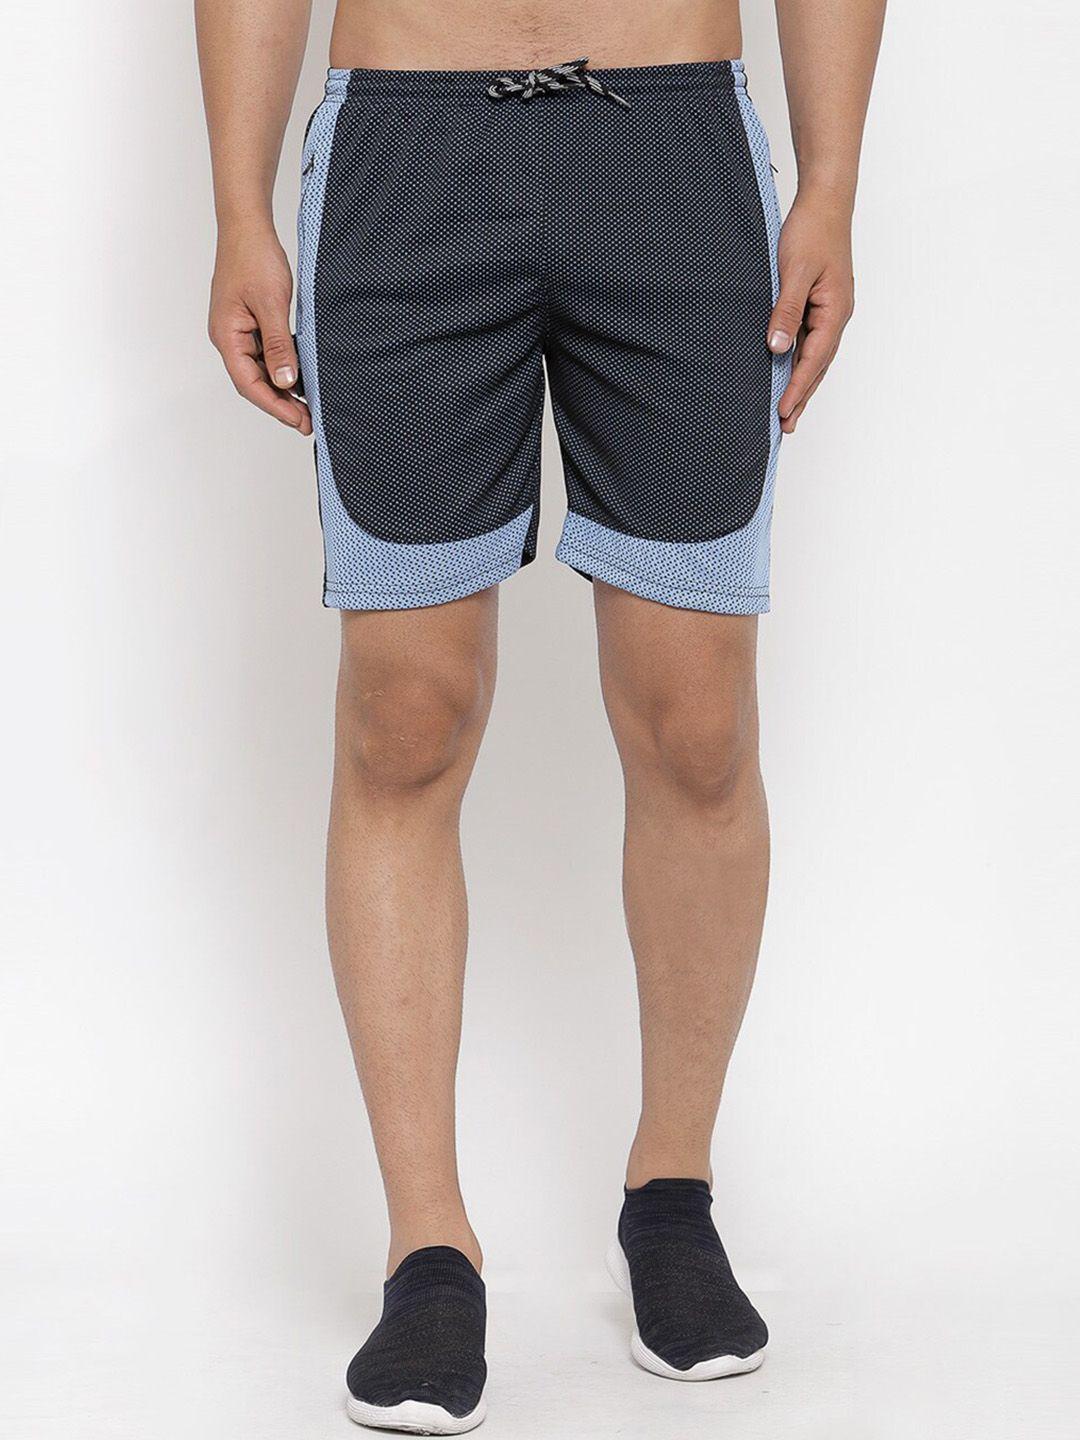 klotthe-men-geometric-printed-rapid-dry-sports-shorts